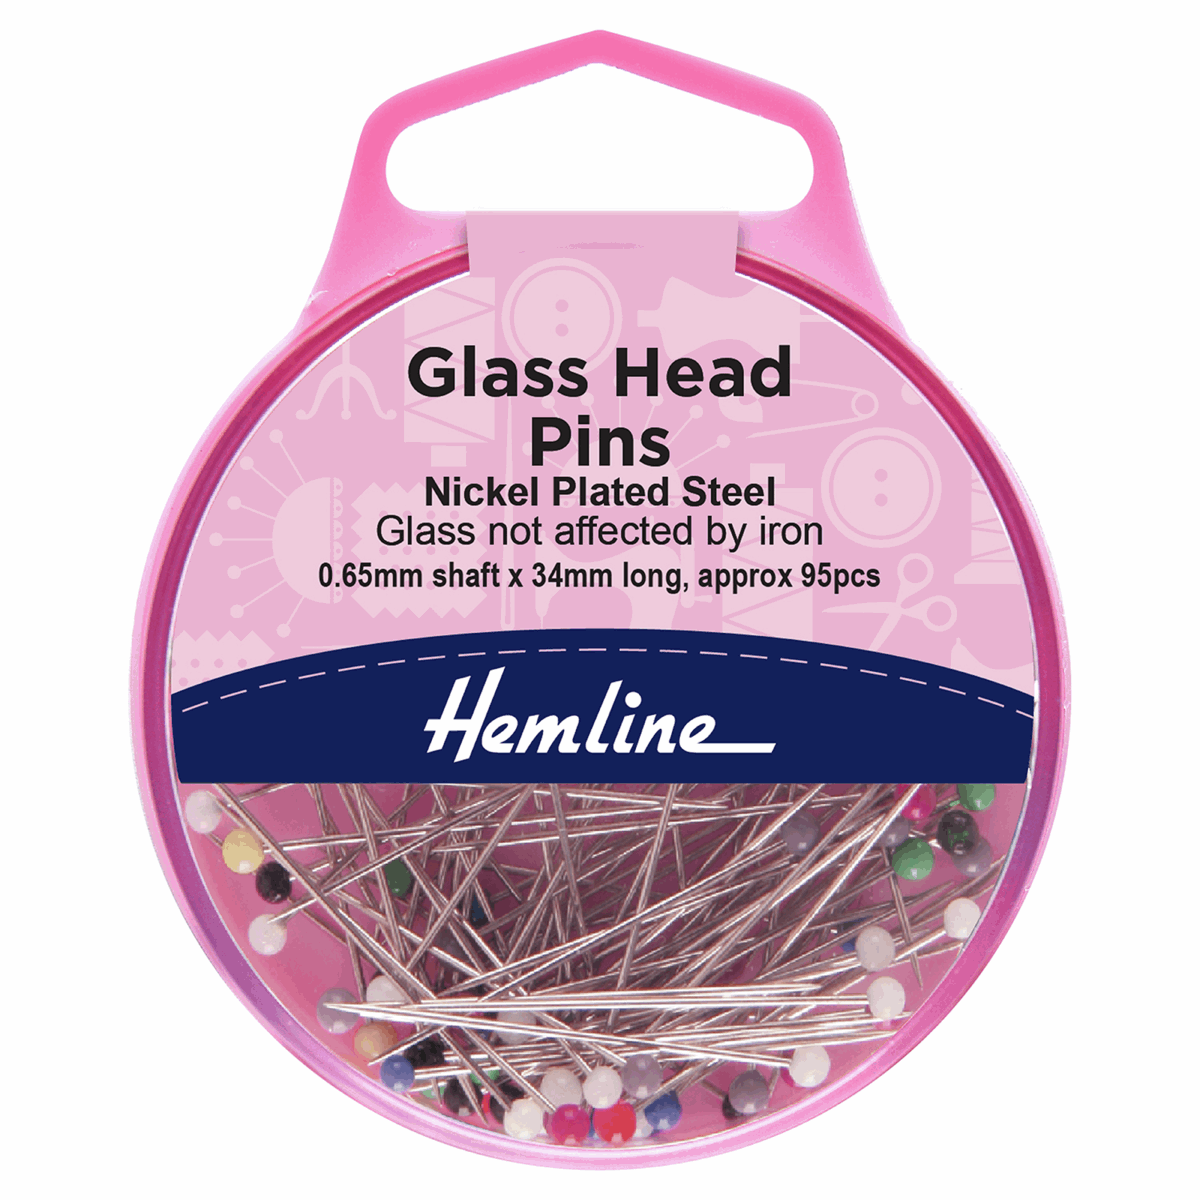 Hemline Glass Headed Pins